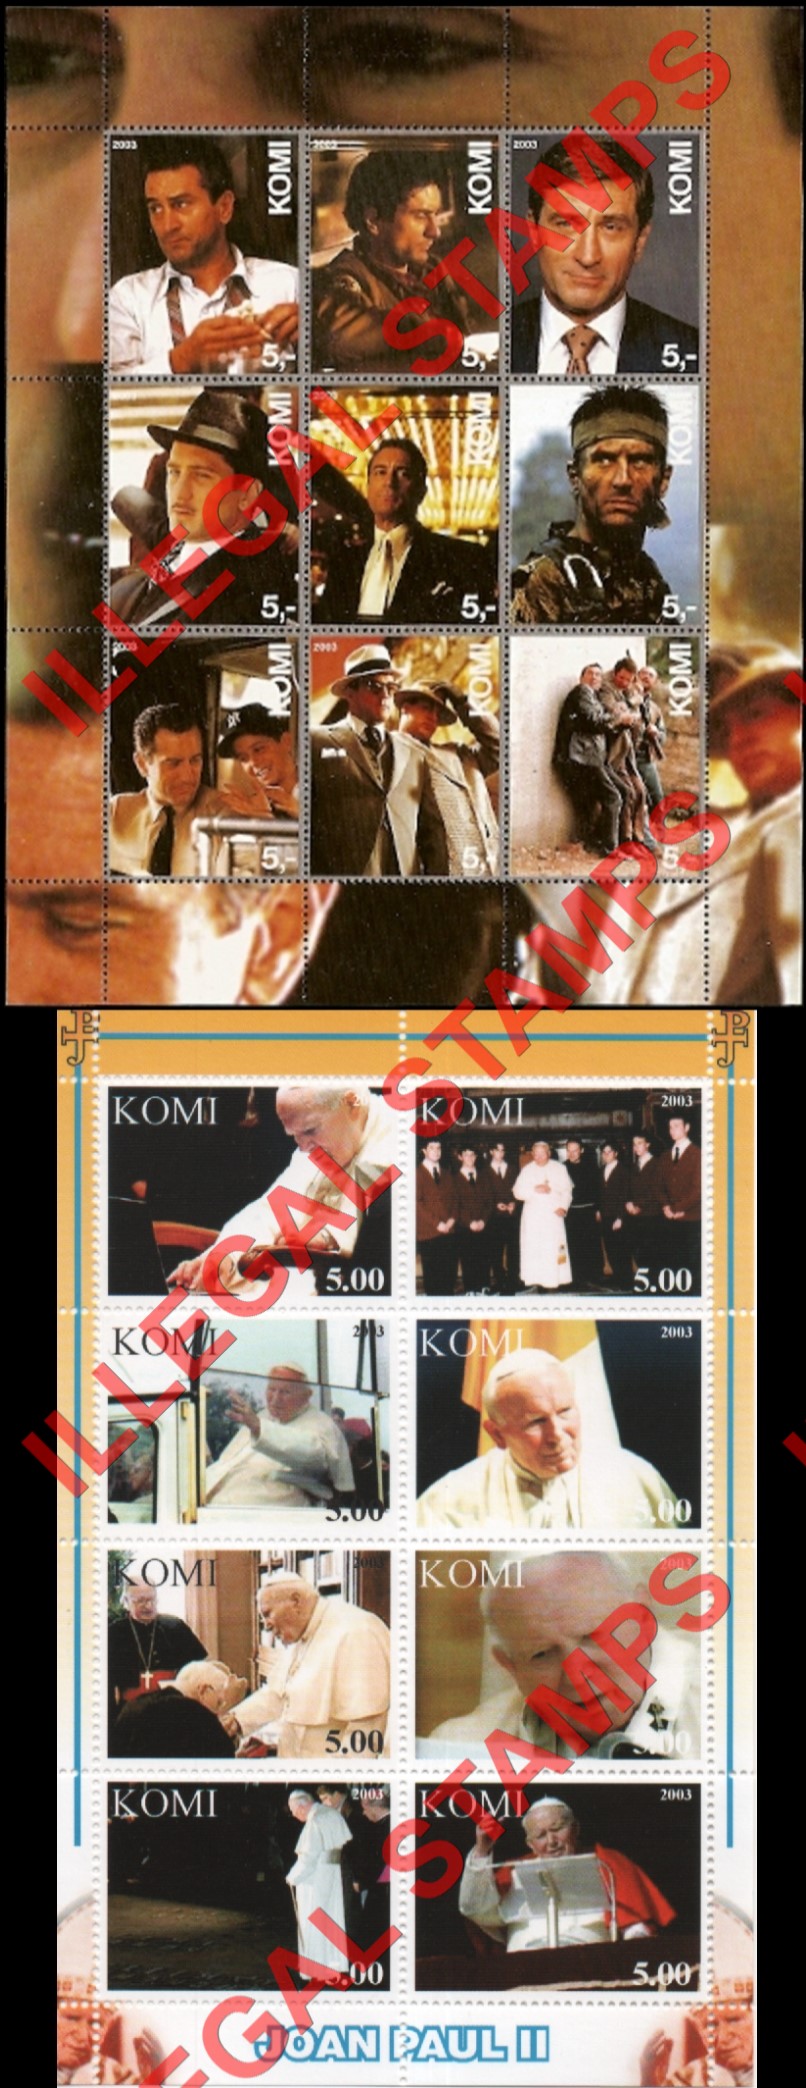 Komi Republic 2003 Counterfeit Illegal Stamps (Part 1)